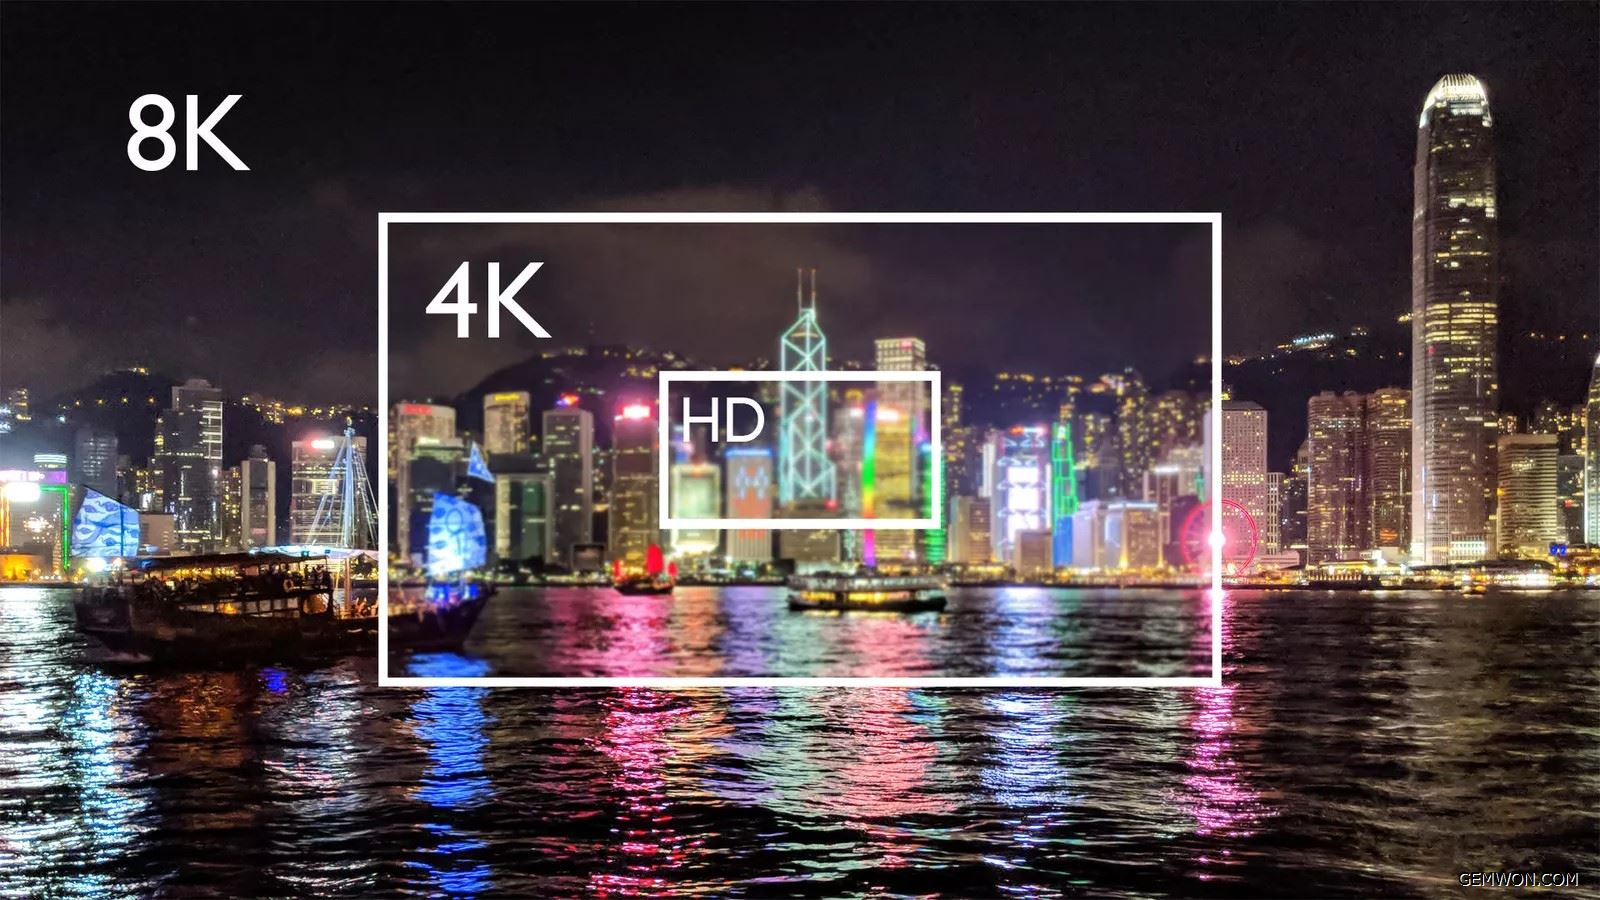 4K resolution screen